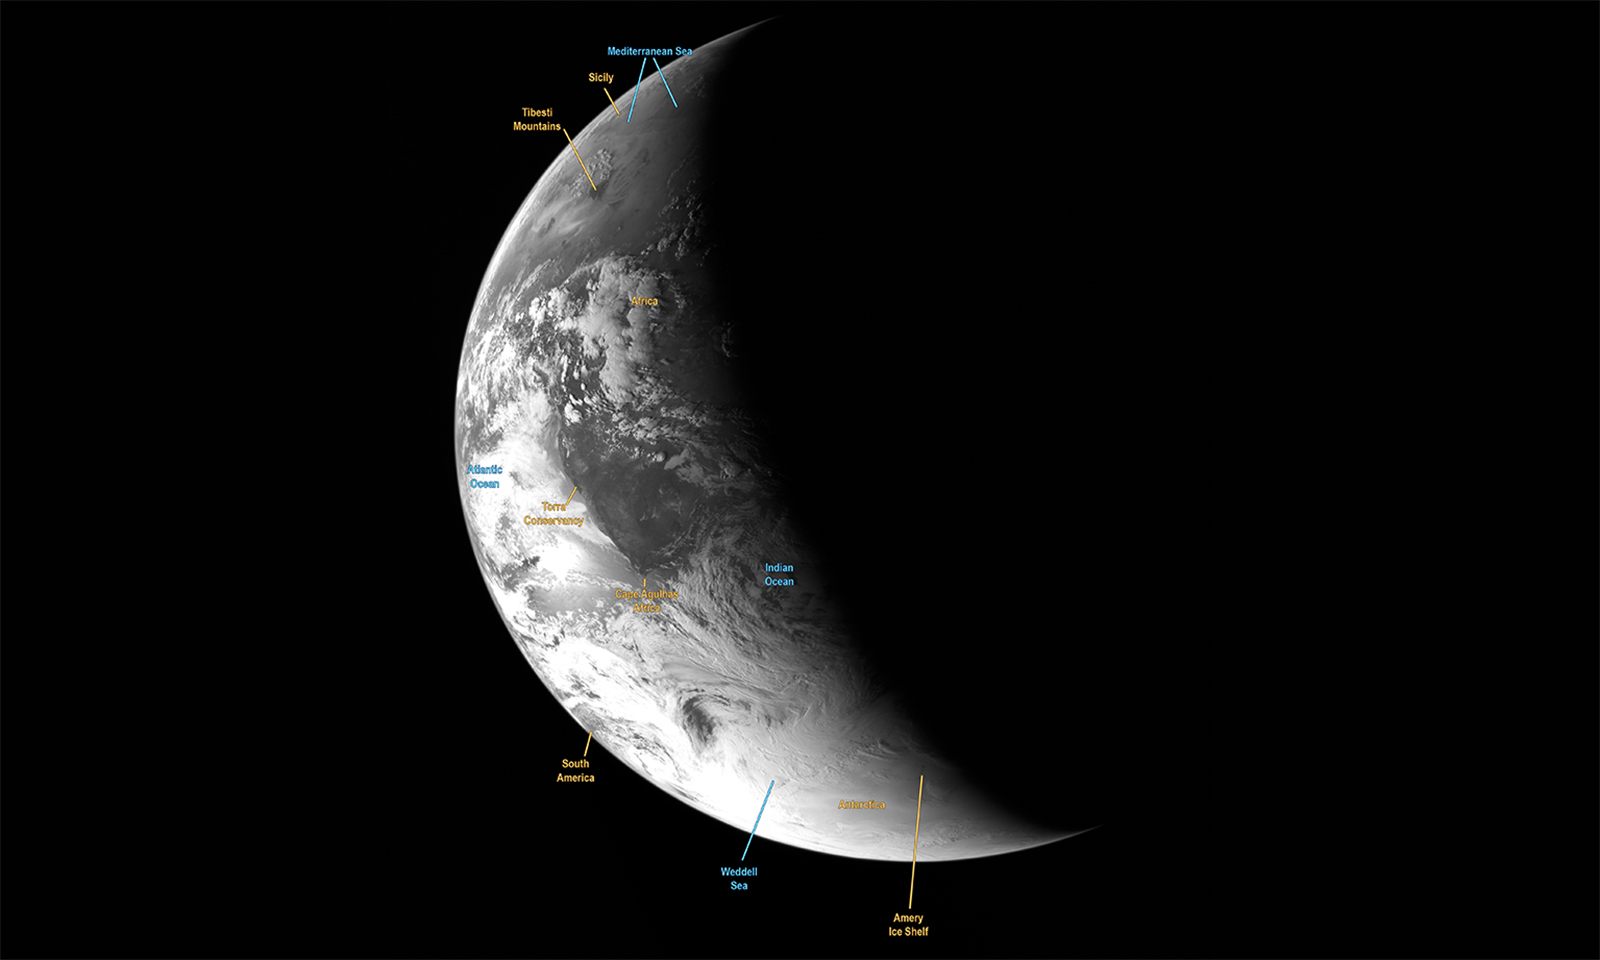 NPS Student Captures Unique Photo of Earth Using Lunar Reconnaissance Orbiter